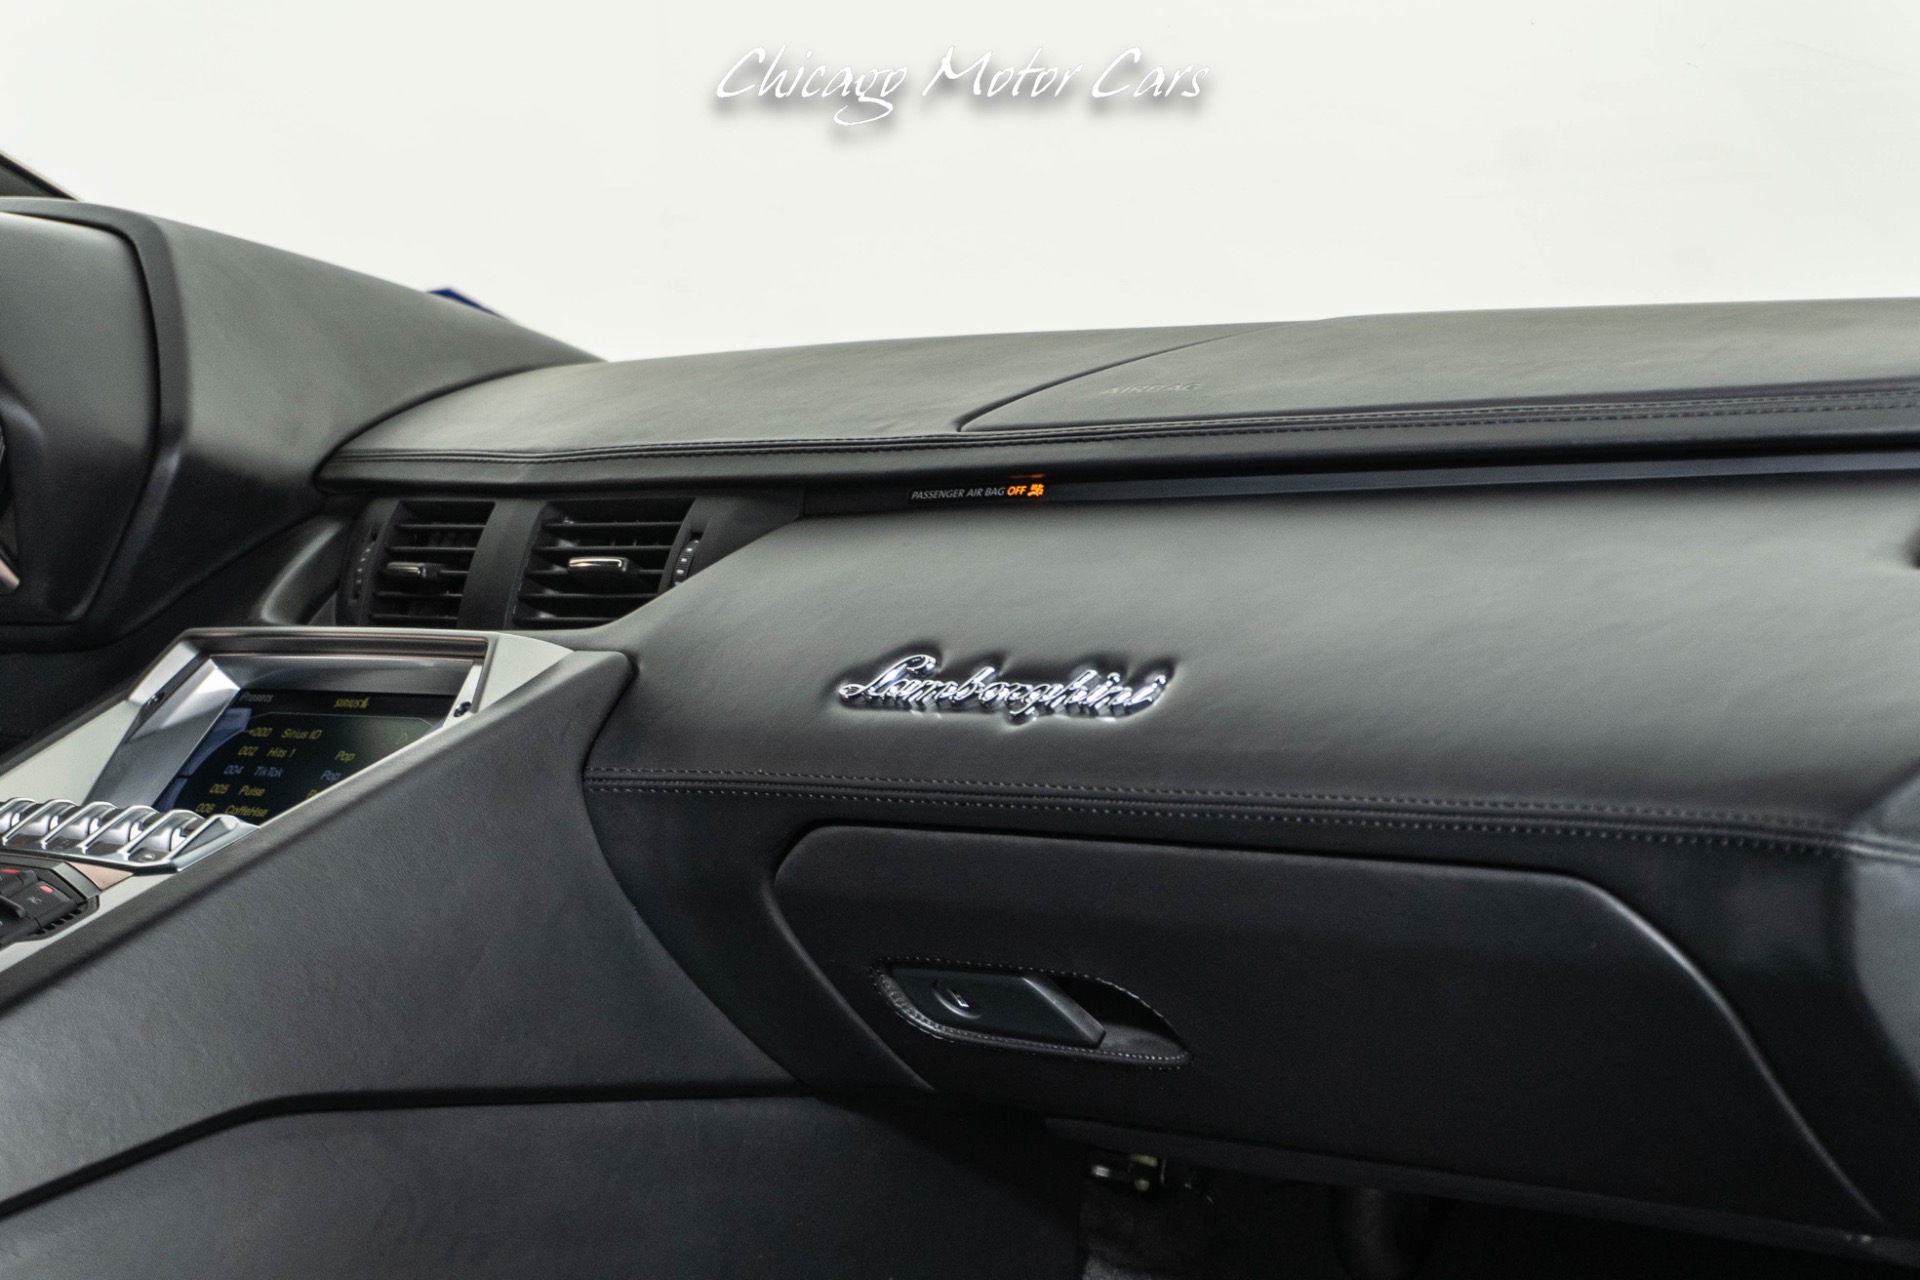 Used-2012-Lamborghini-Aventador-LP700-4-Coupe-Over-275k-UGR-1R-BUILD--Billet-intakesEngine-refresh